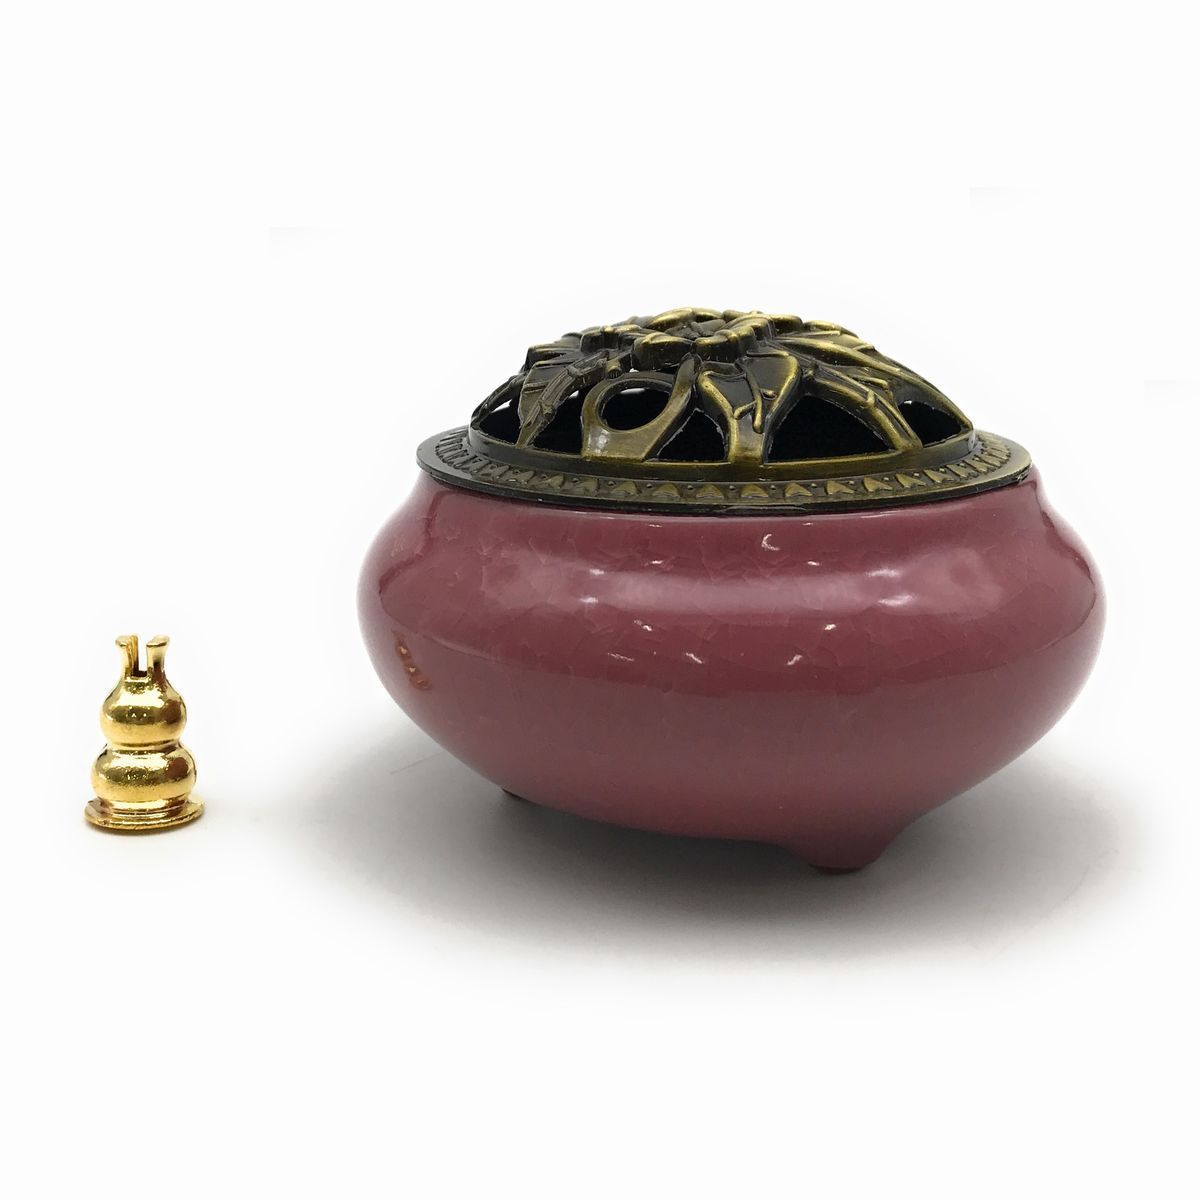  censer antique modern manner crack pattern ceramics made cover fragrance establish attaching ( purple )